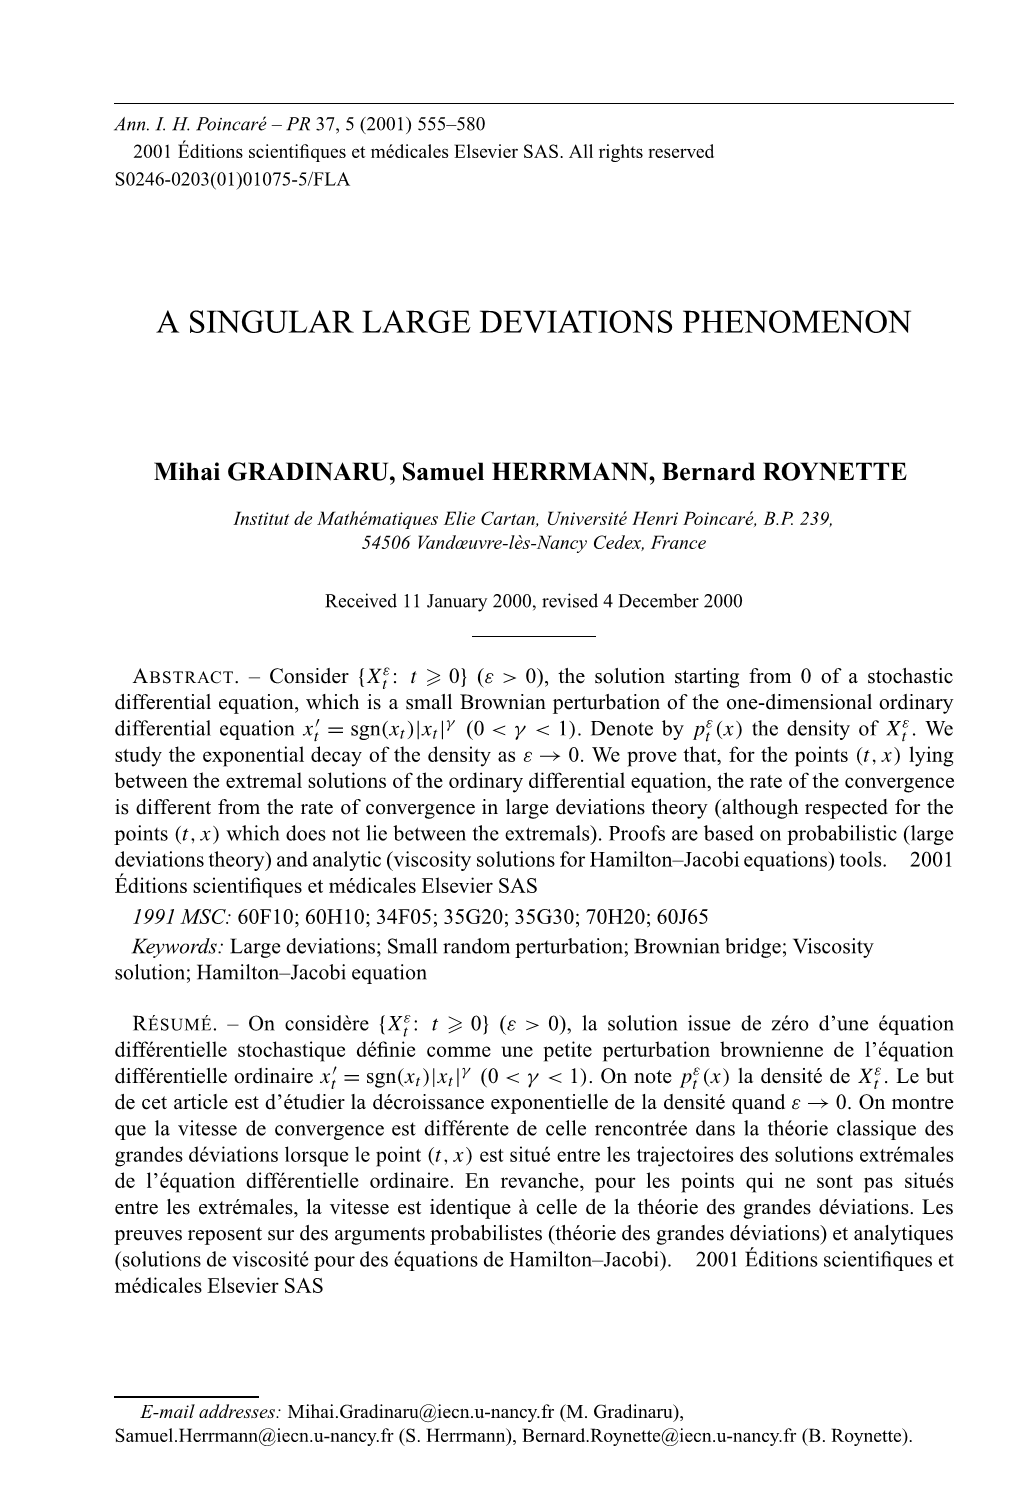 A Singular Large Deviations Phenomenon